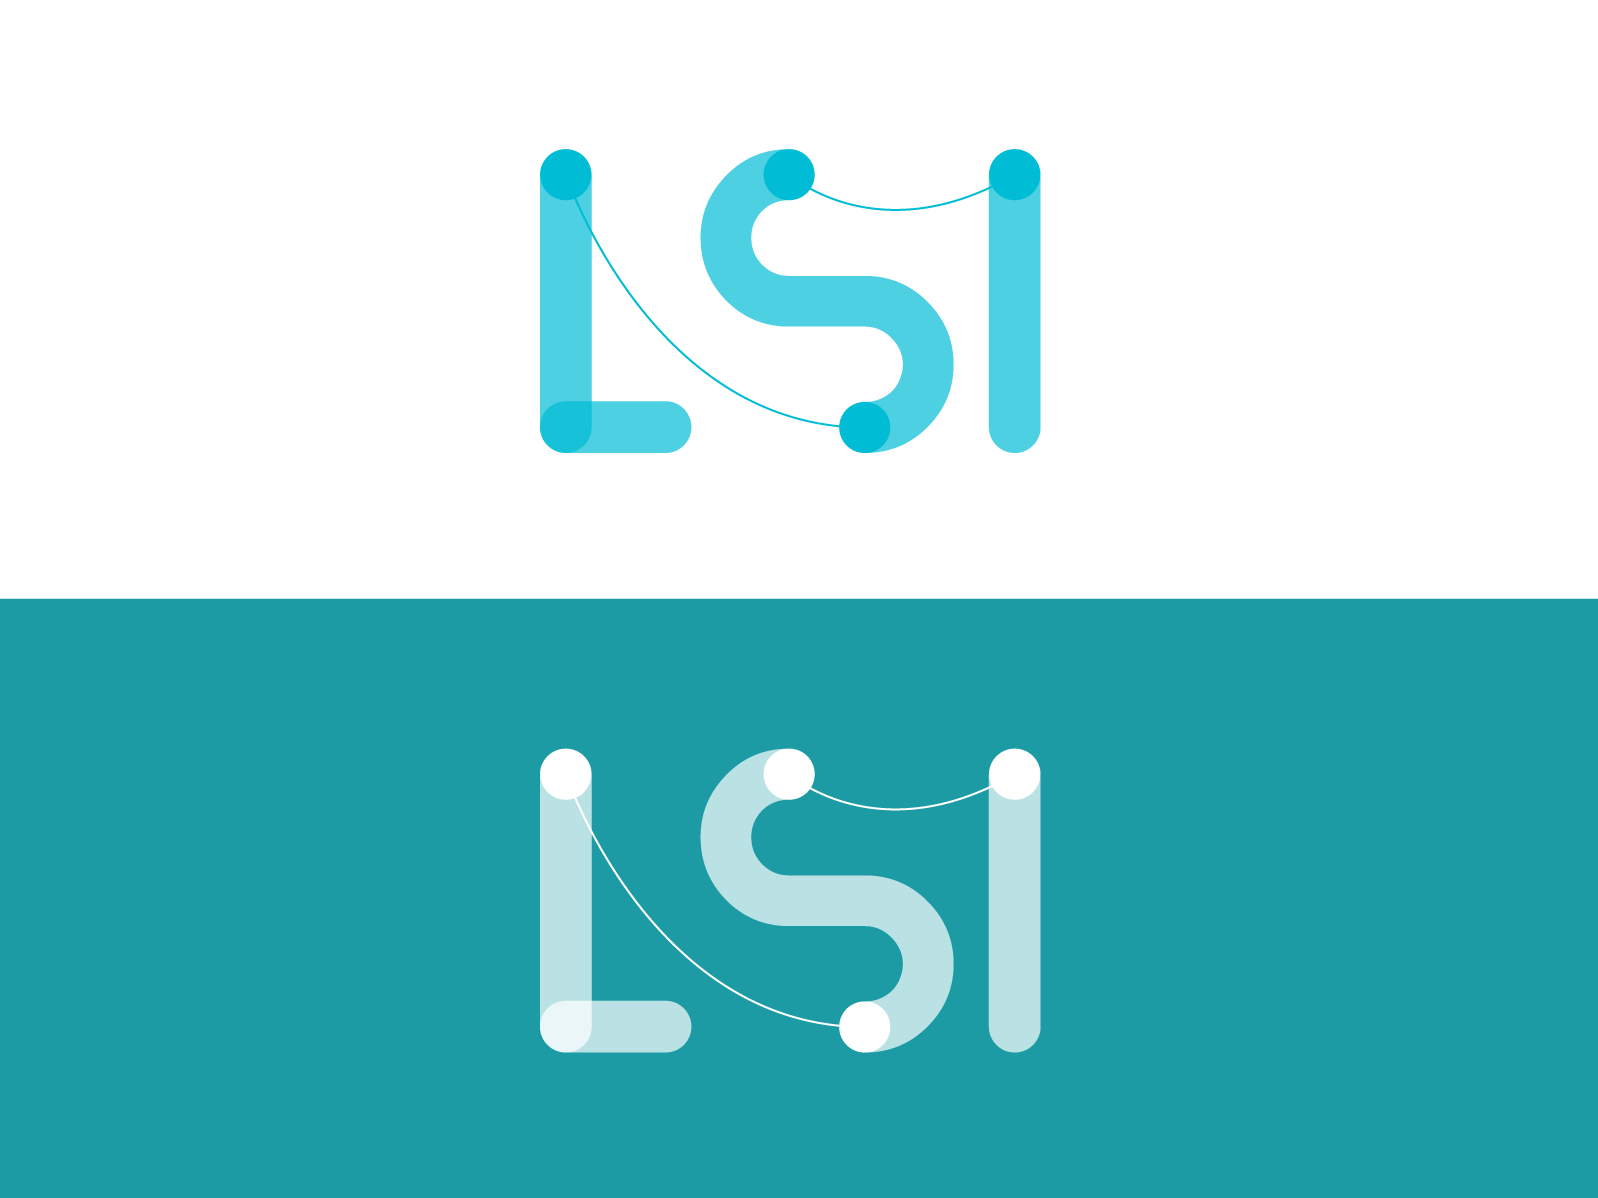 LSI Logo - LSI by Alexandre on Dribbble